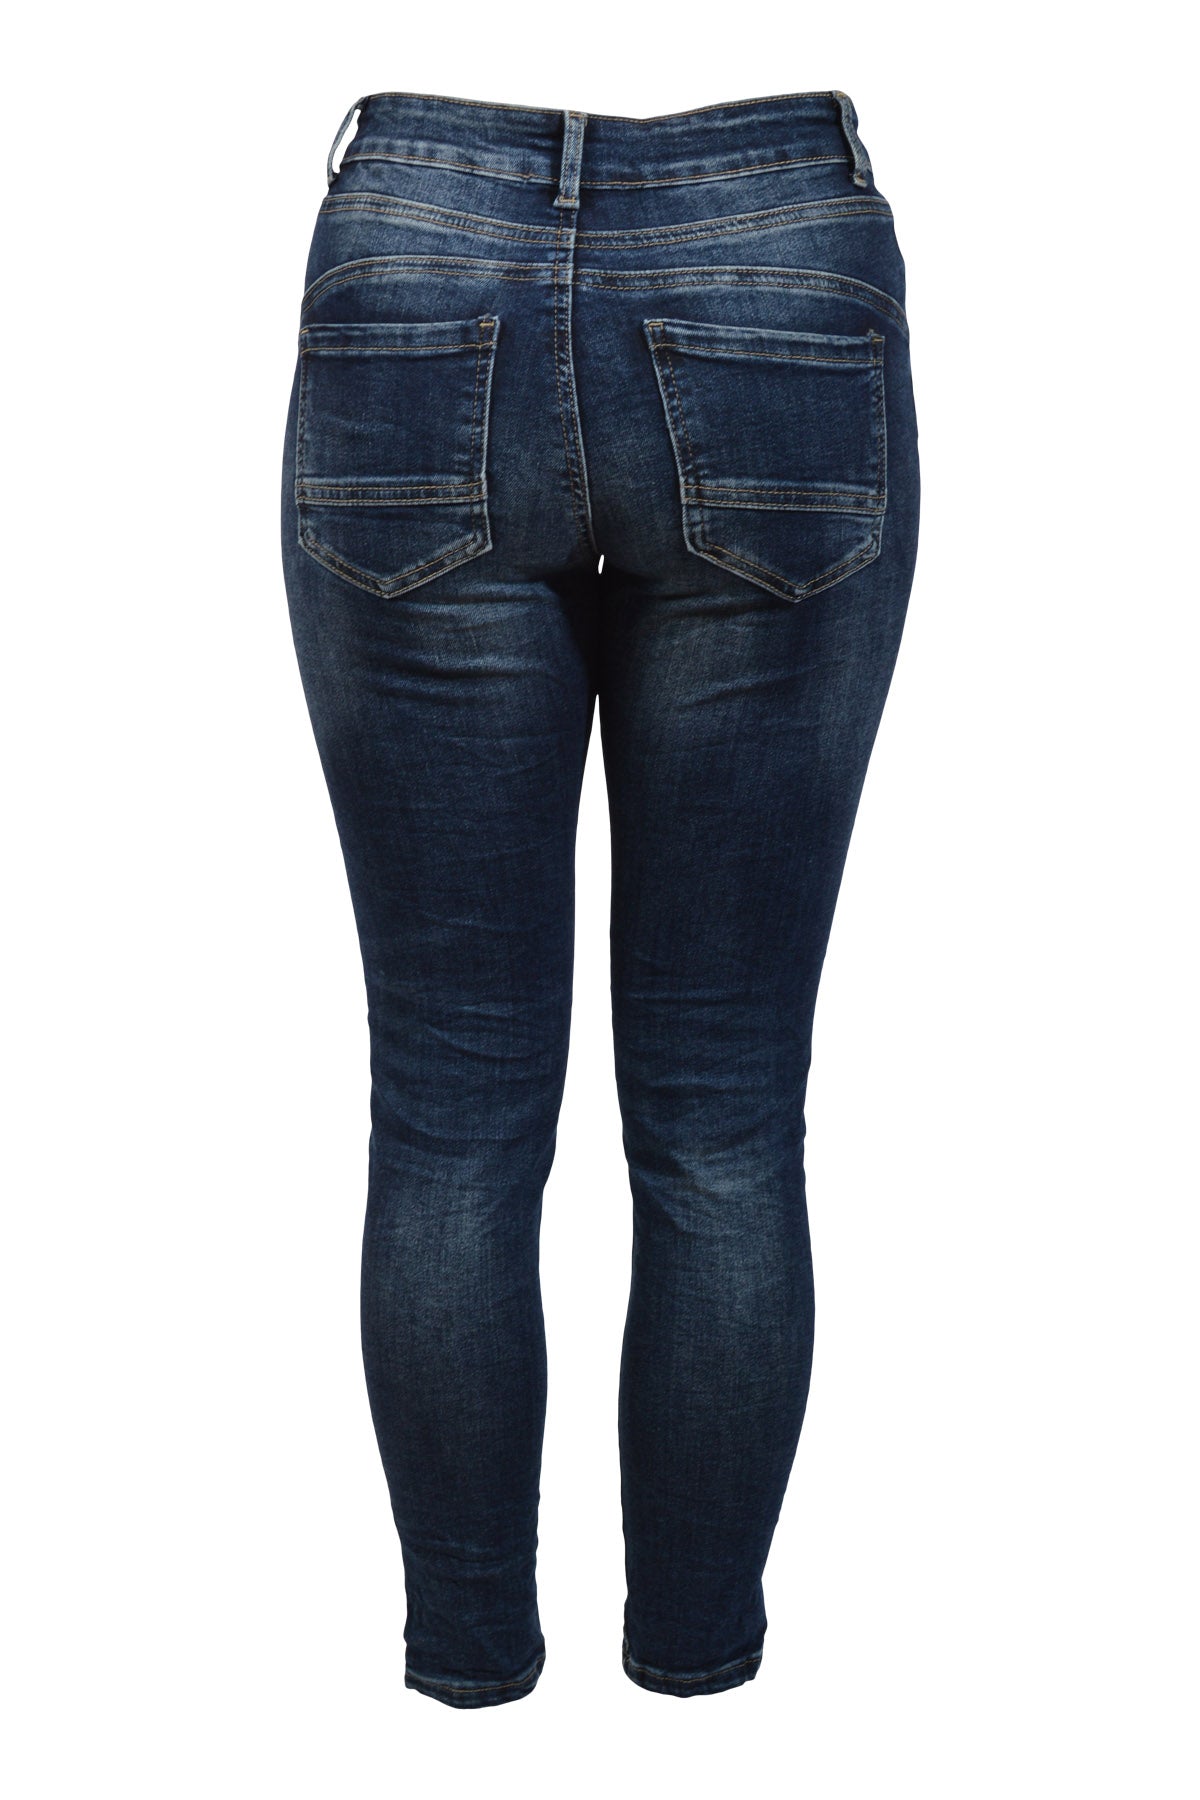 Piro jeans PB505, Jeans